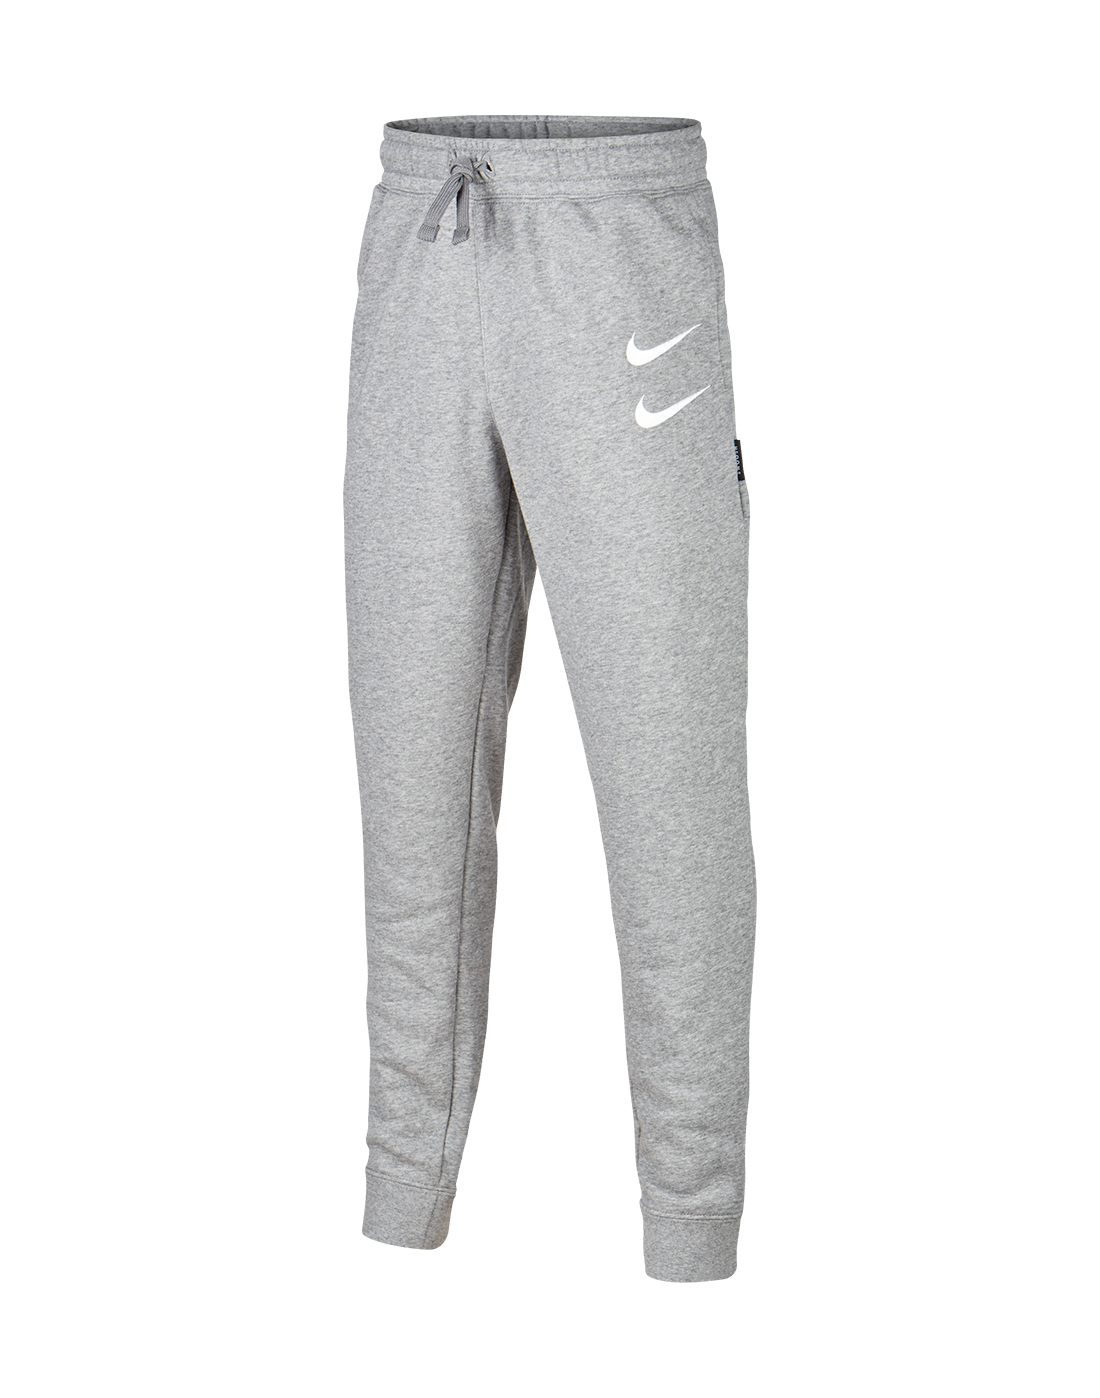 Nike Older Boys Swoosh Pants - Grey | Life Style Sports IE